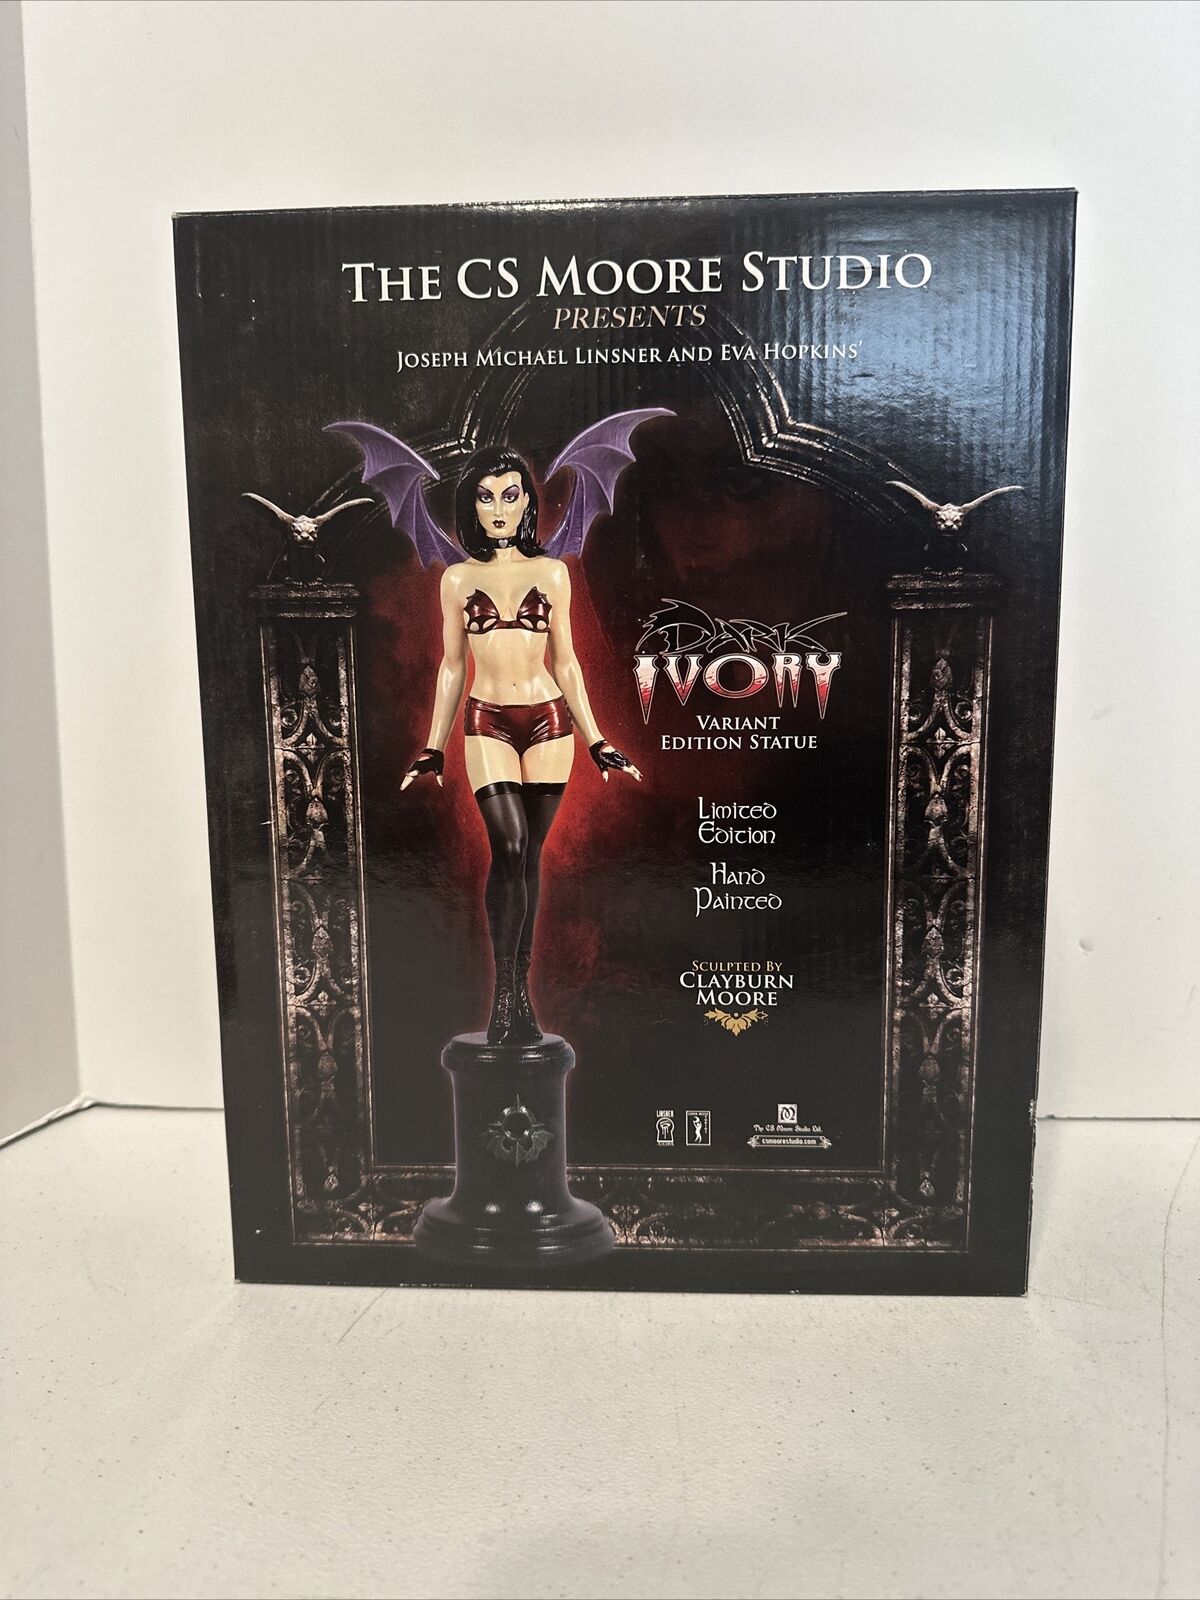 CS Moore Studio and Joseph M. Linsner Dark Ivory variant edition #162 of 500 NEW